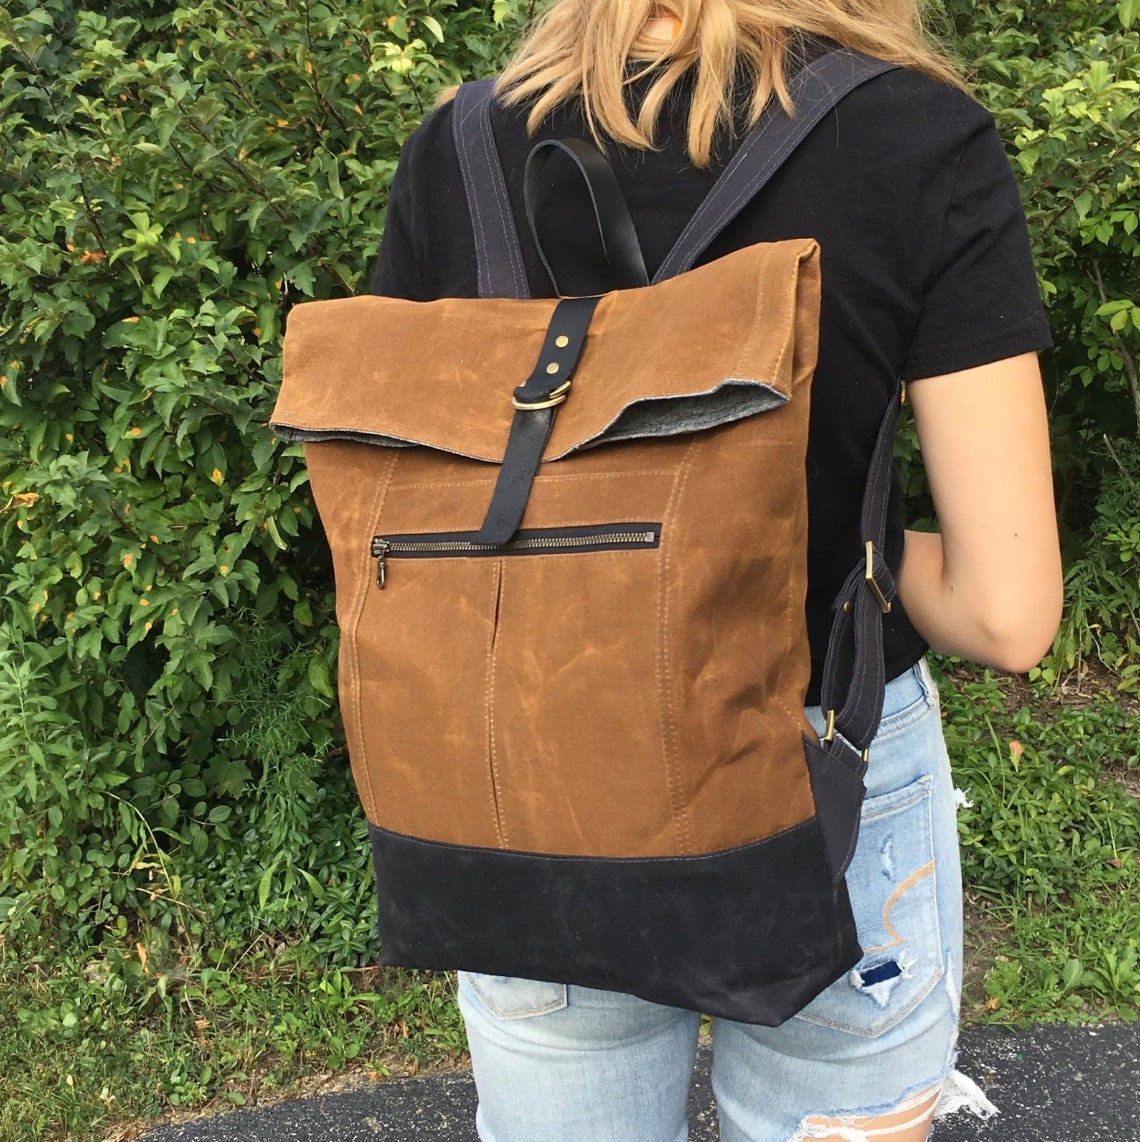 Range Backpack Pattern – Noodlehead Sewing Patterns